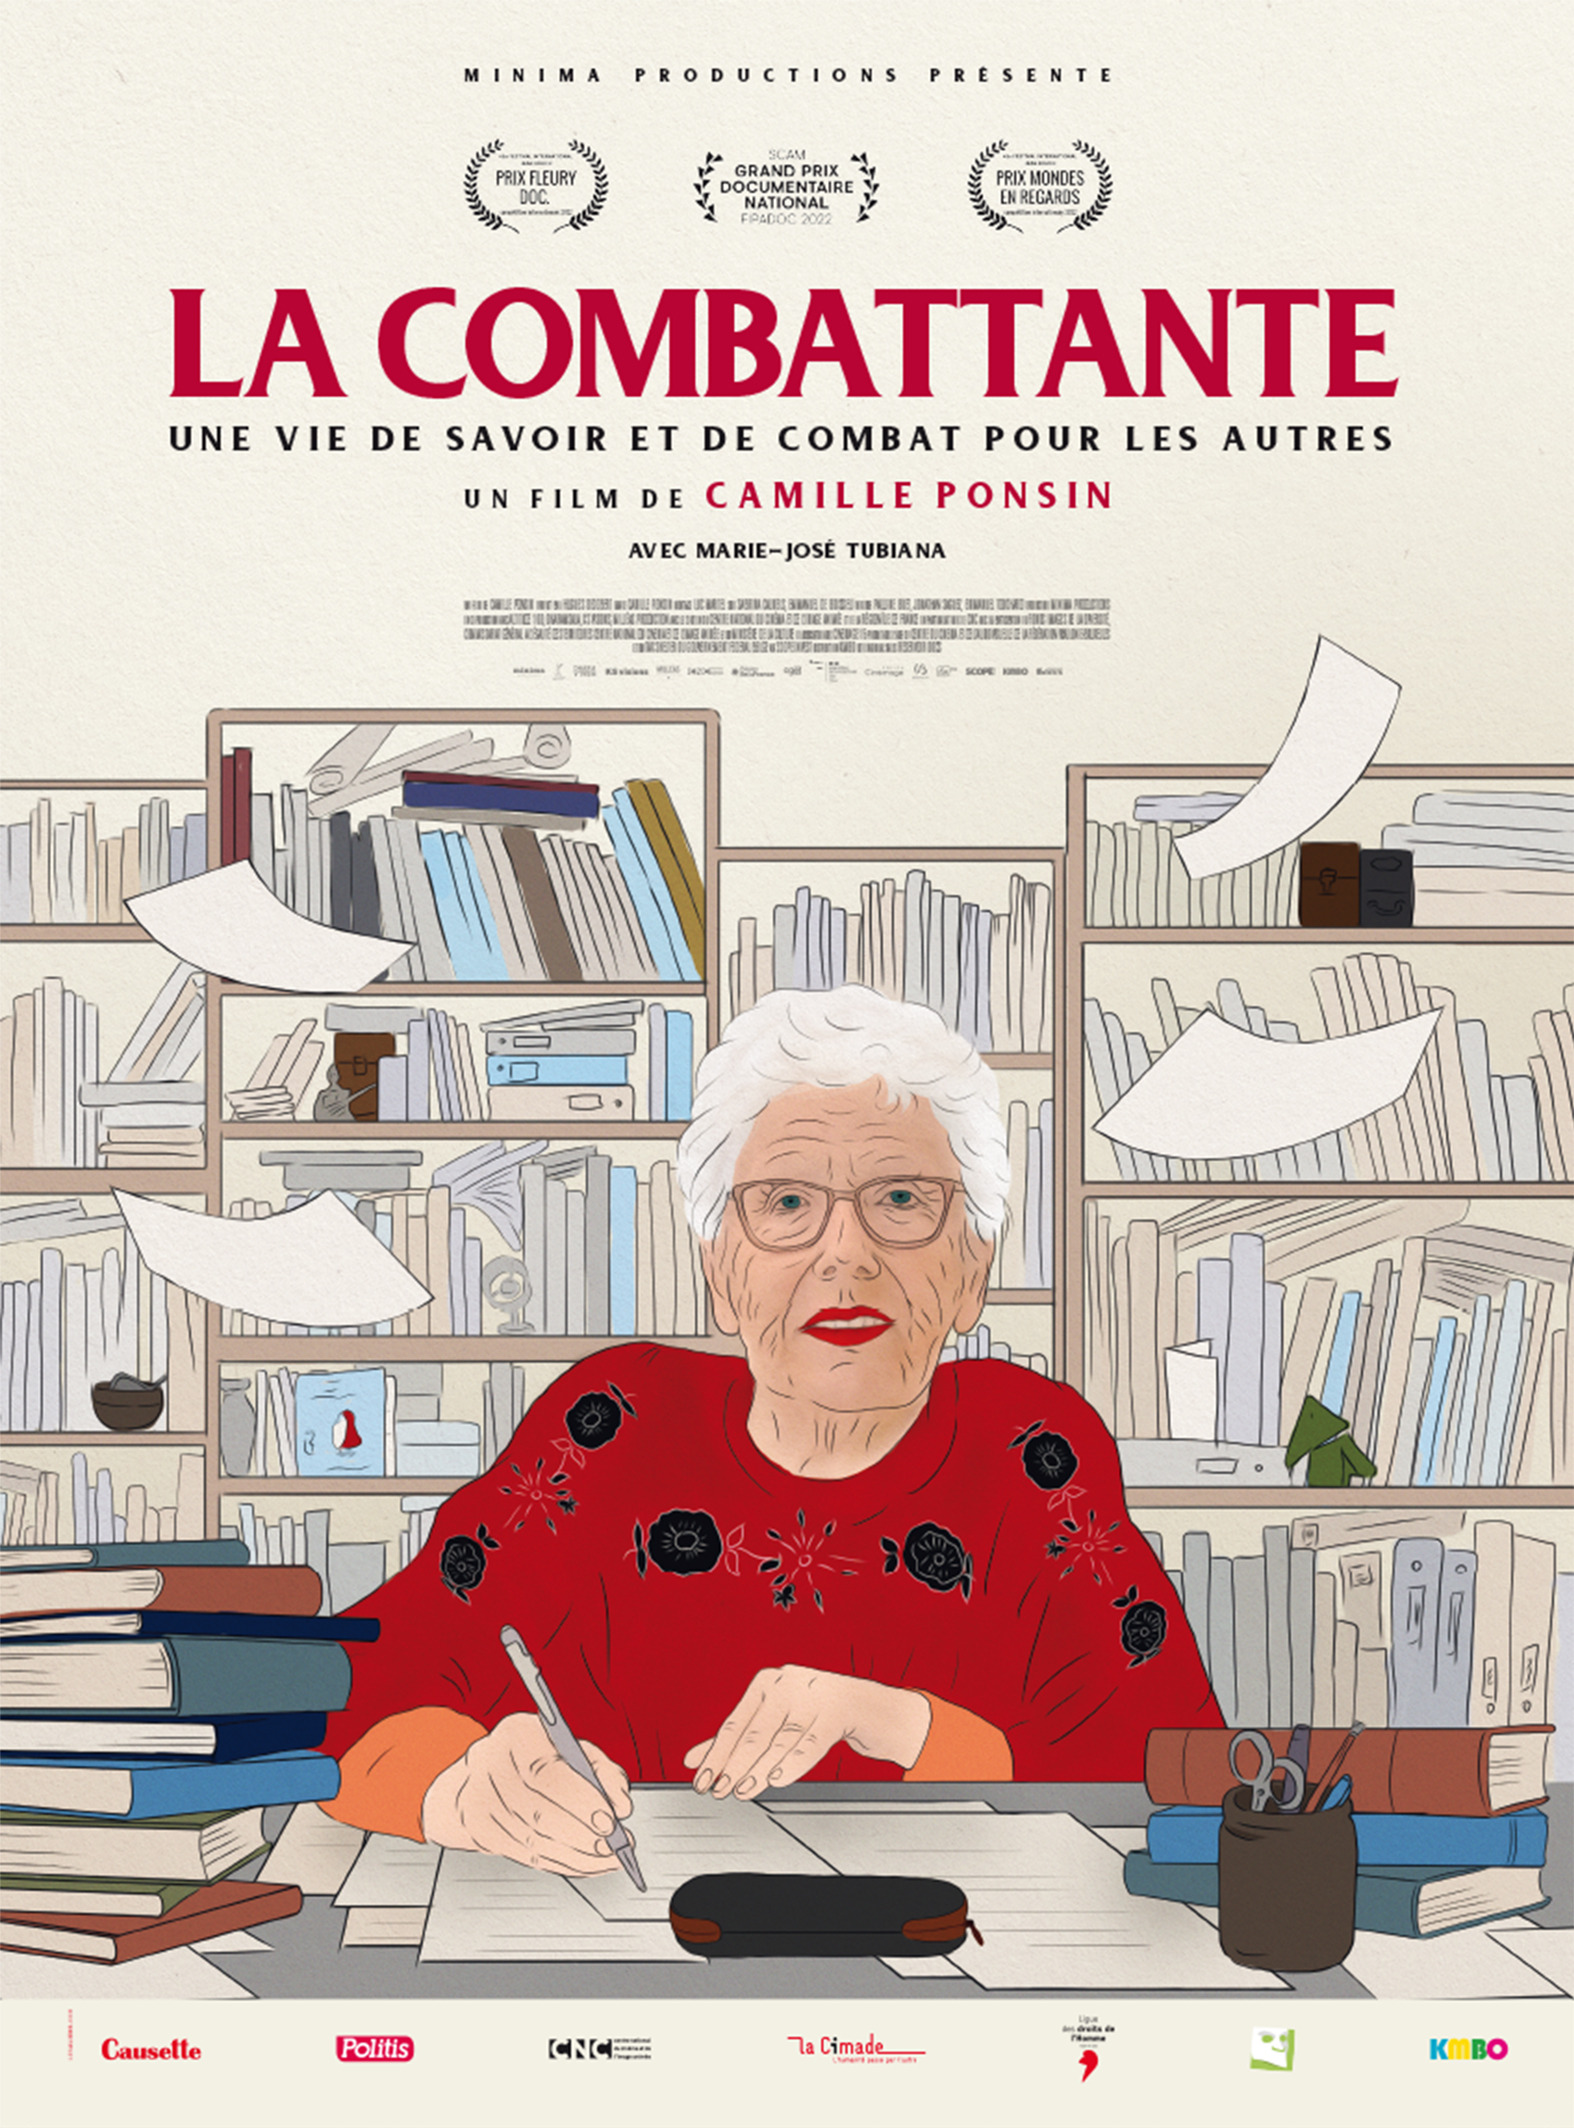 Mega Sized Movie Poster Image for La combattante 